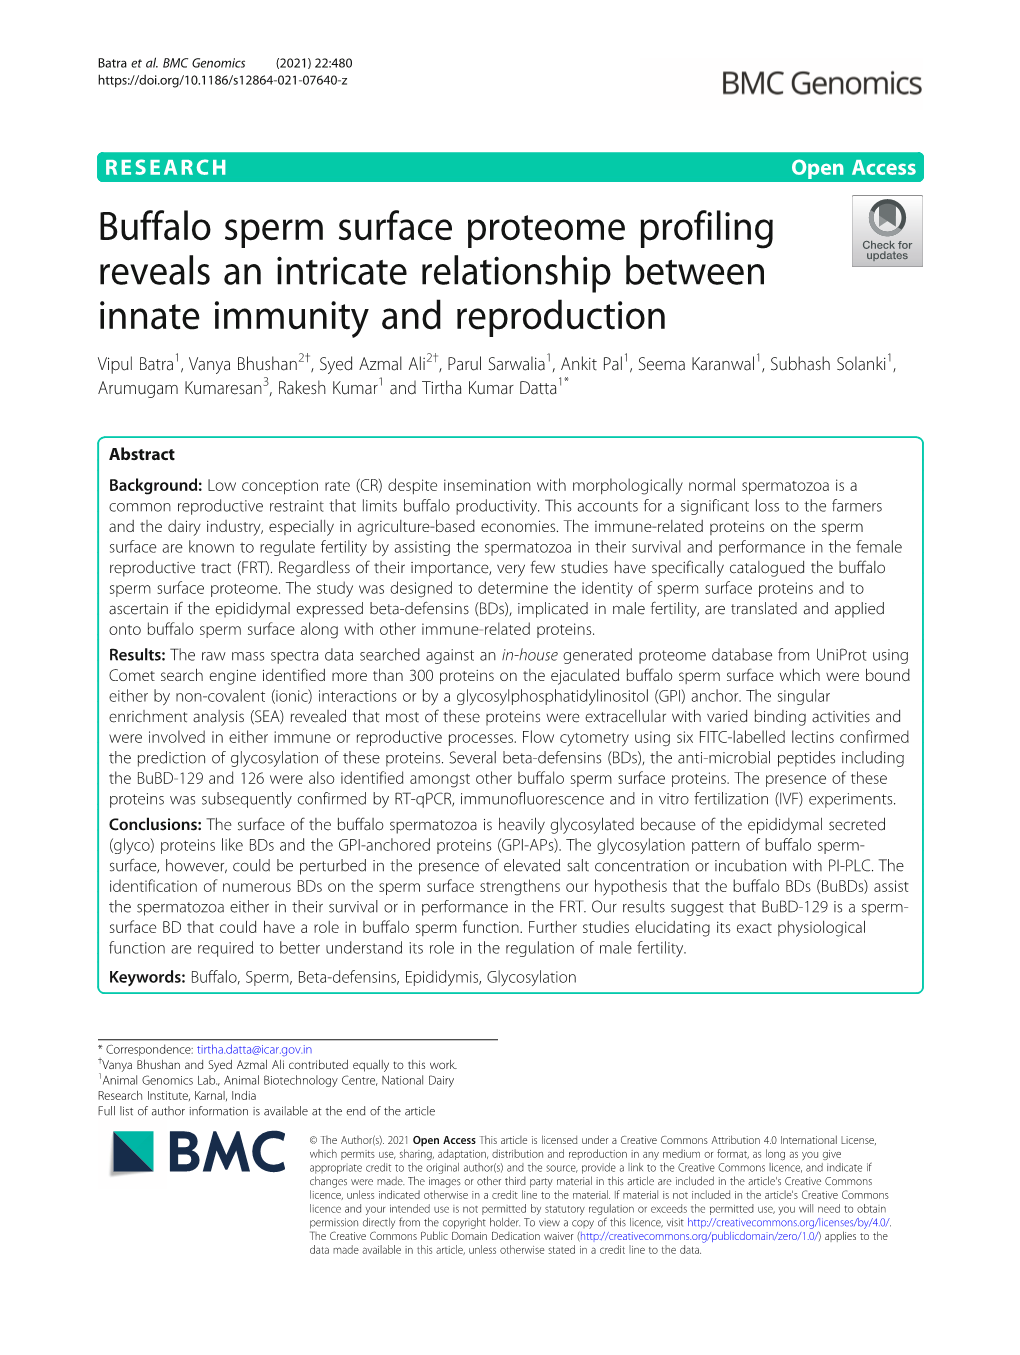 Buffalo Sperm Surface Proteome Profiling Reveals an Intricate